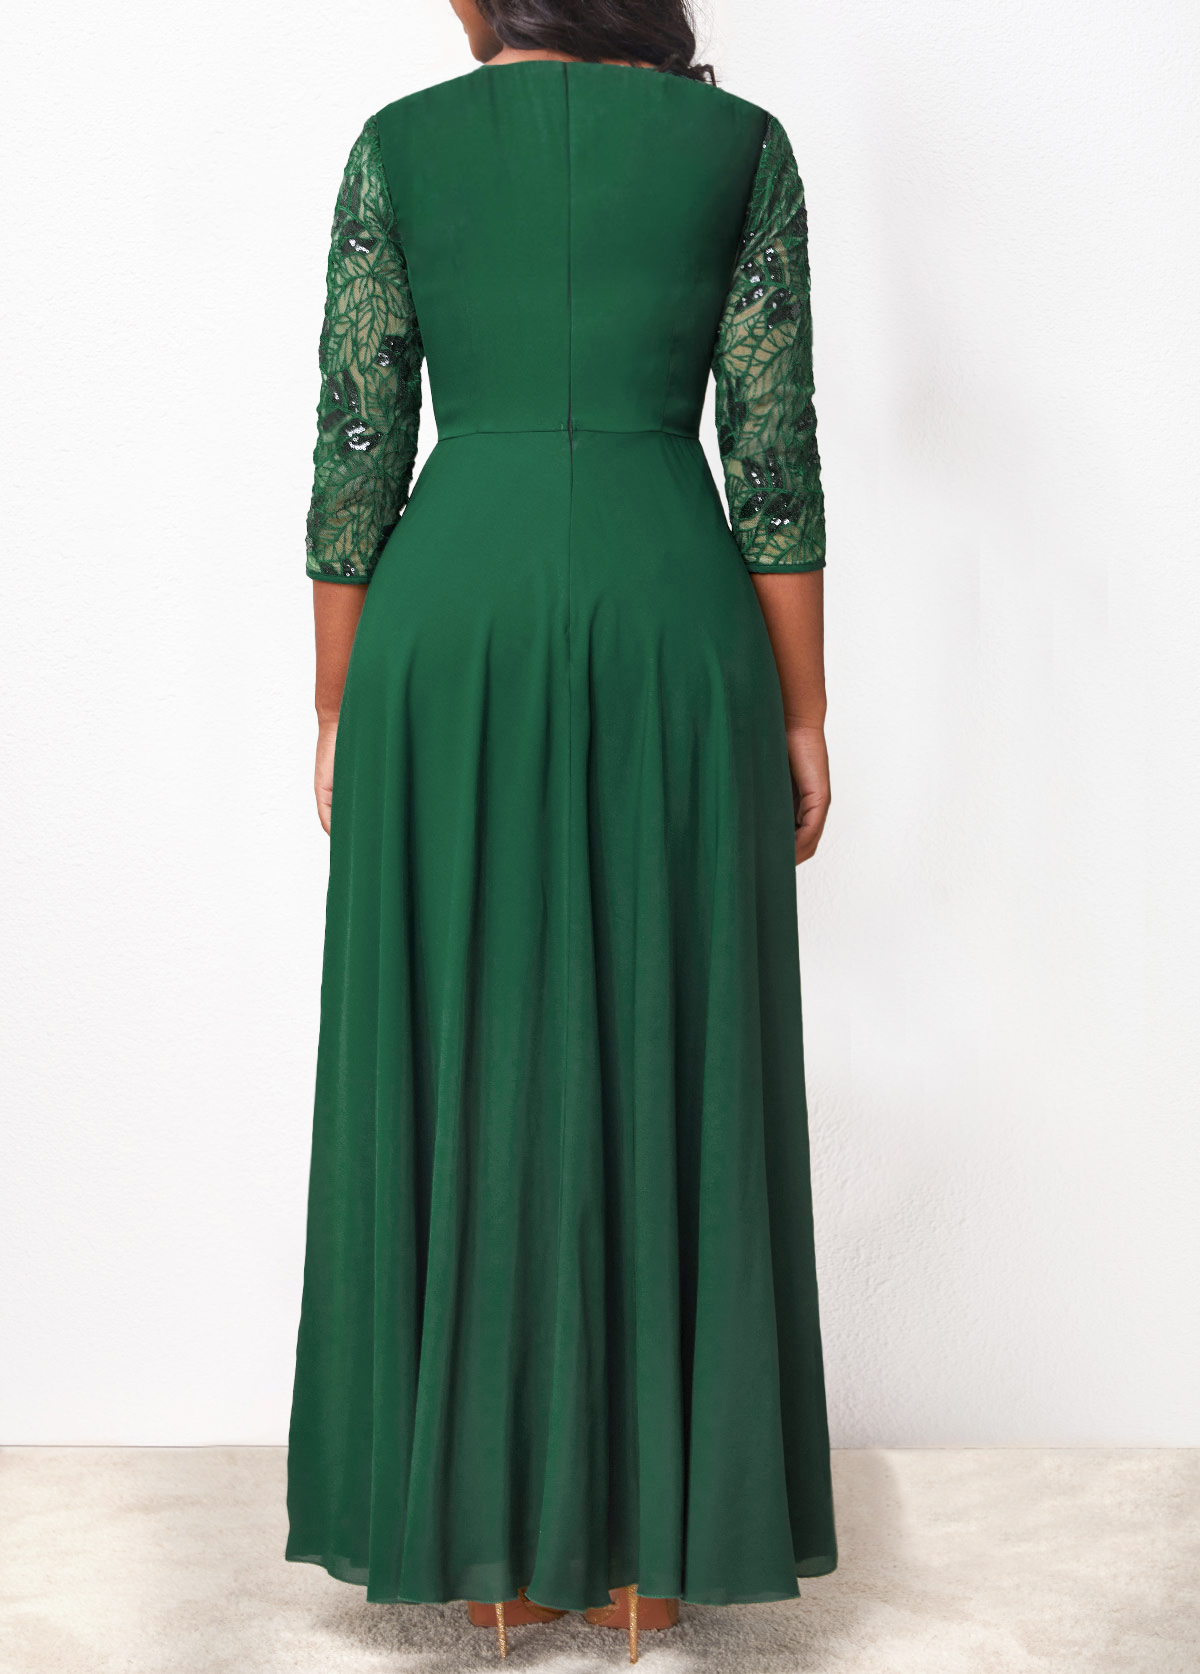 Blackish Green Lace Sequin Maxi Dress